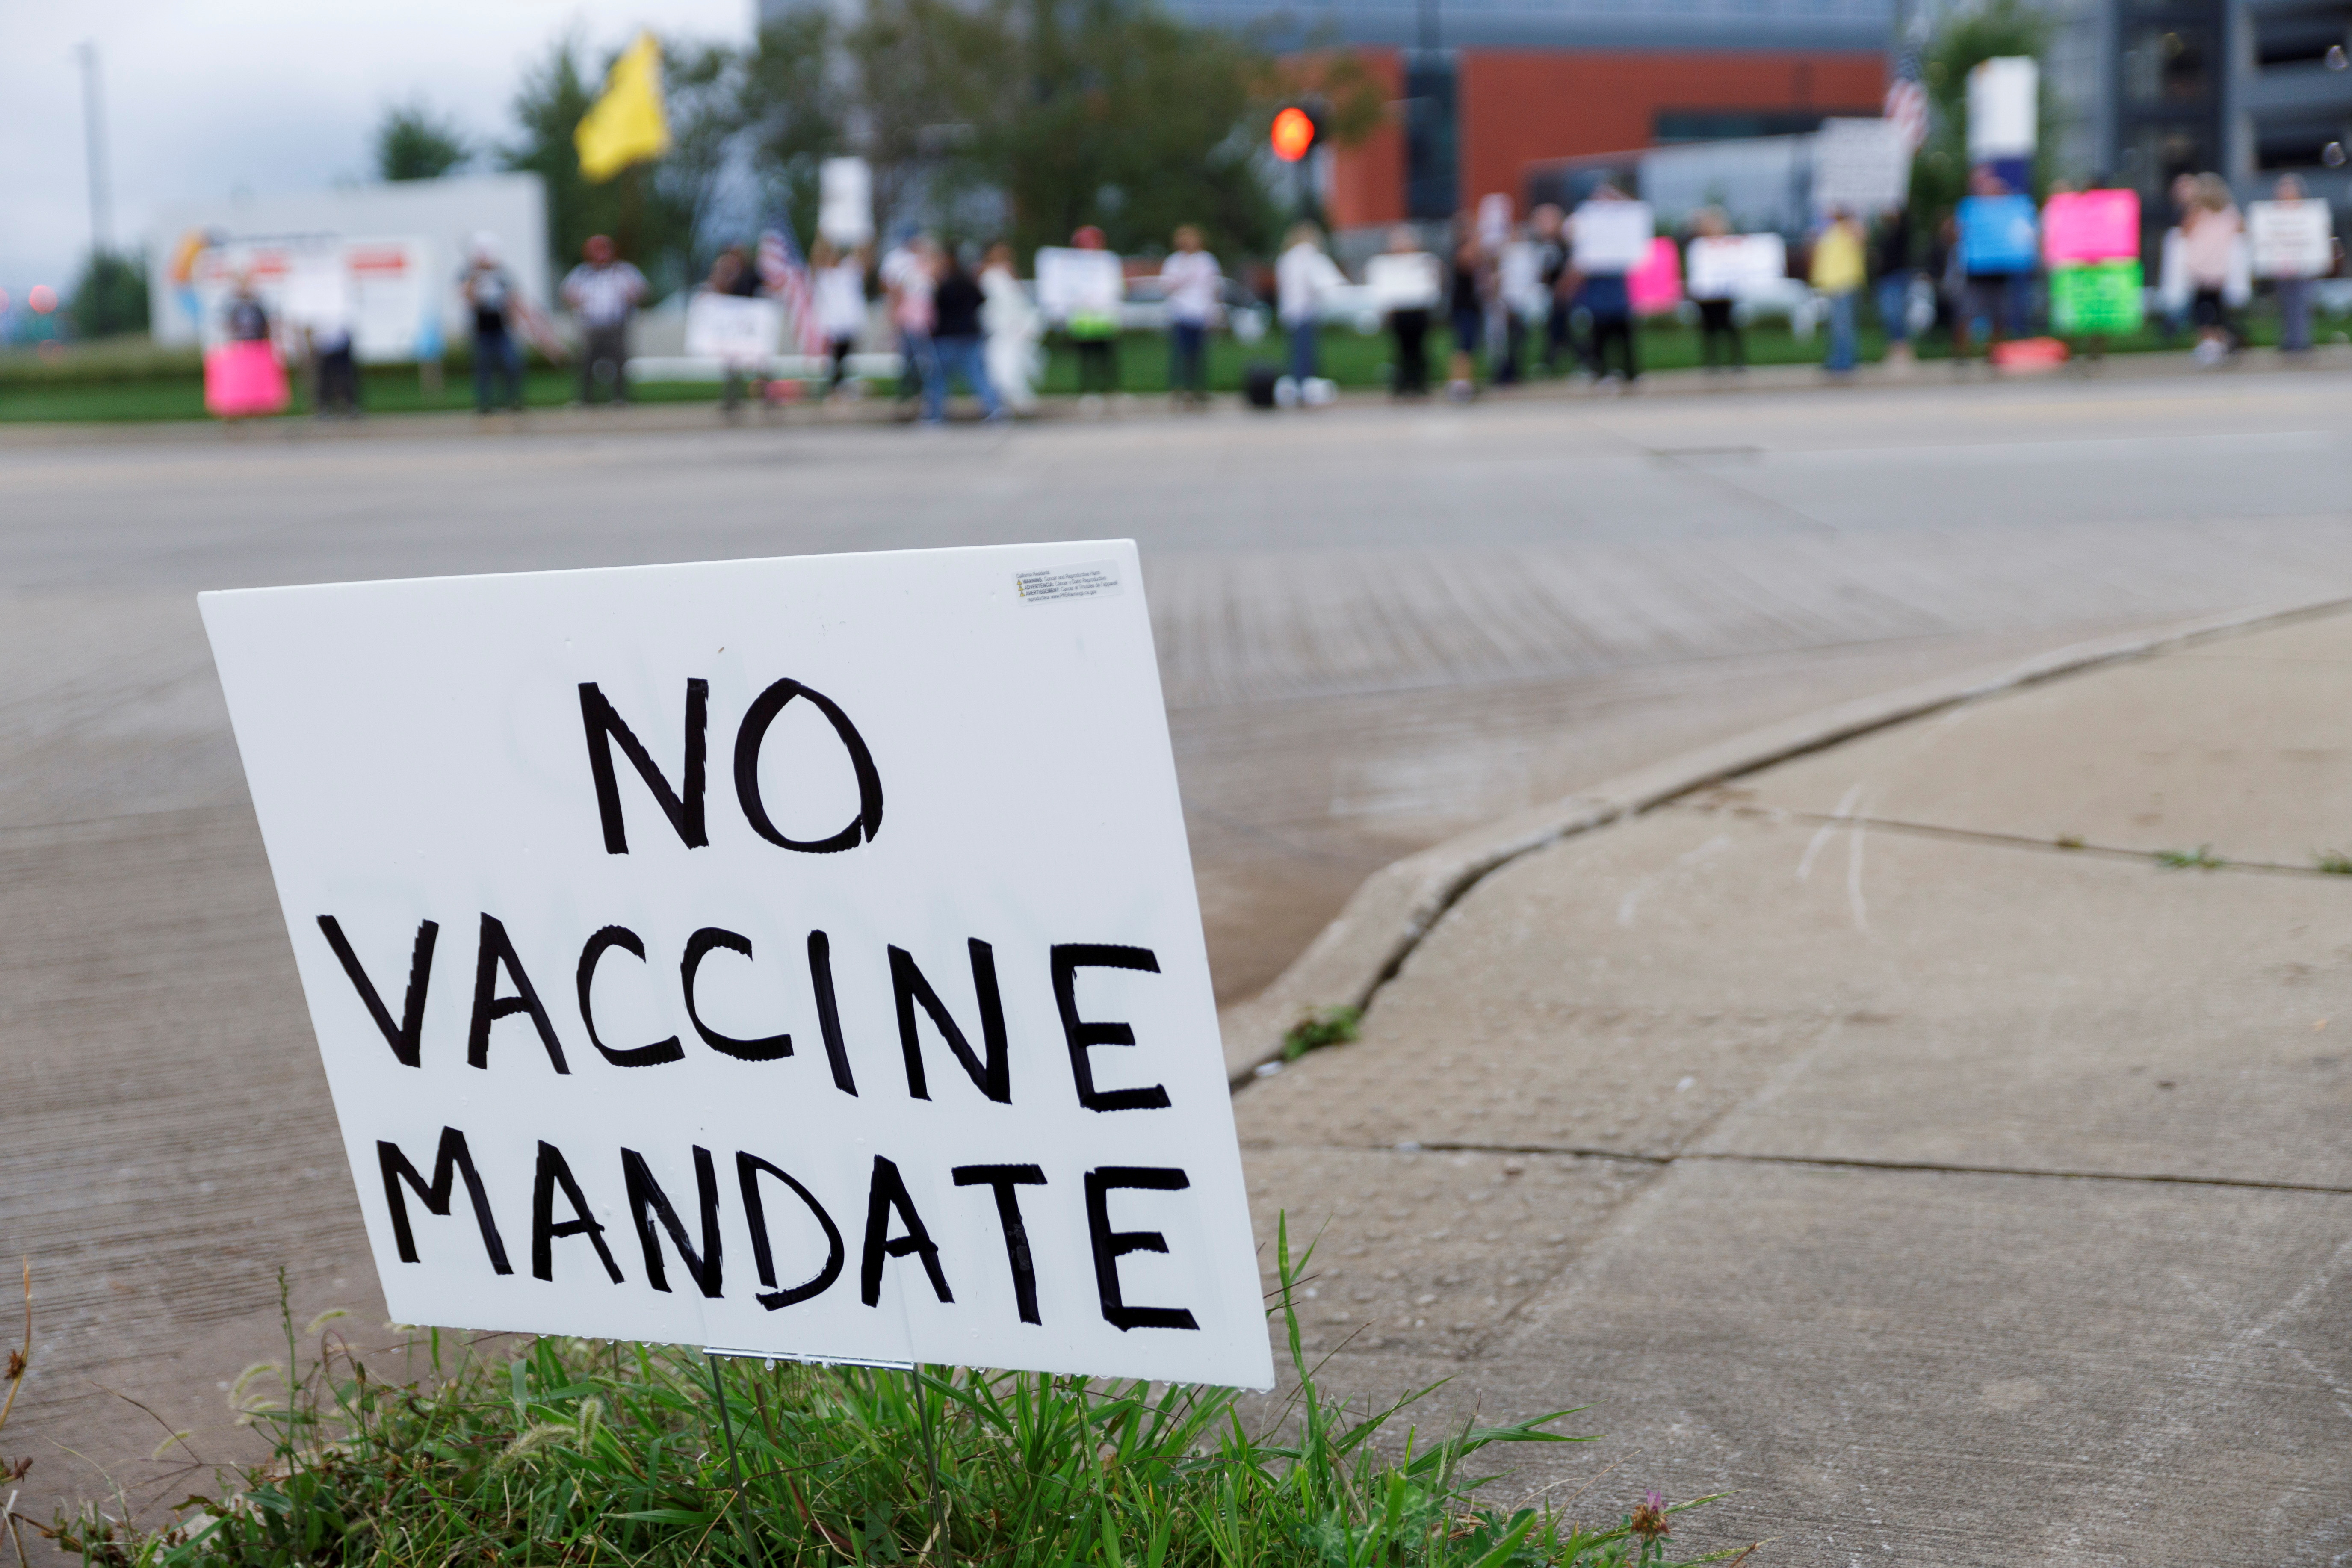 People protest vaccine mandates at Summa Health Hospital in Ohio